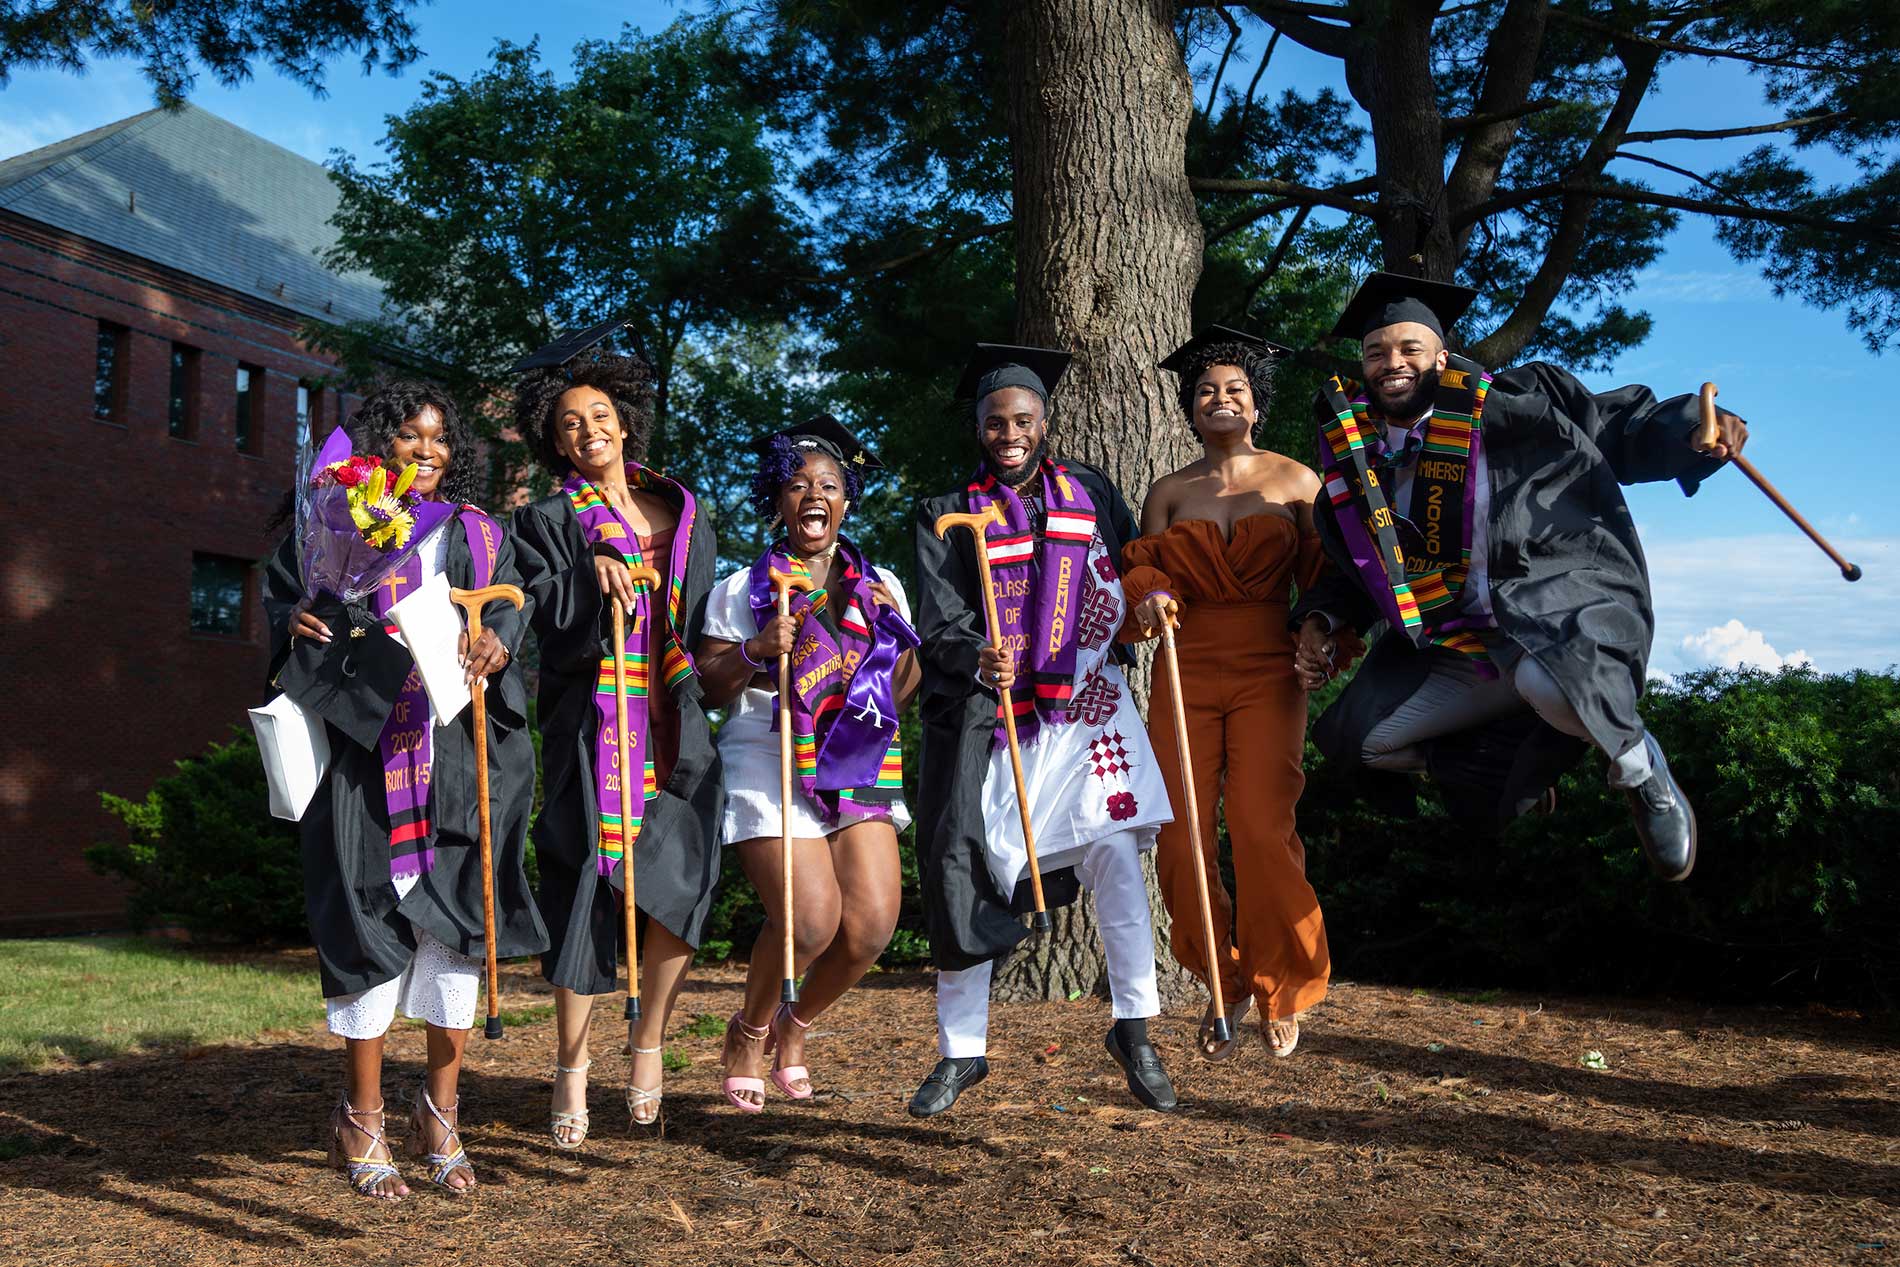 A group of graduates wearing regalia jump in unison.